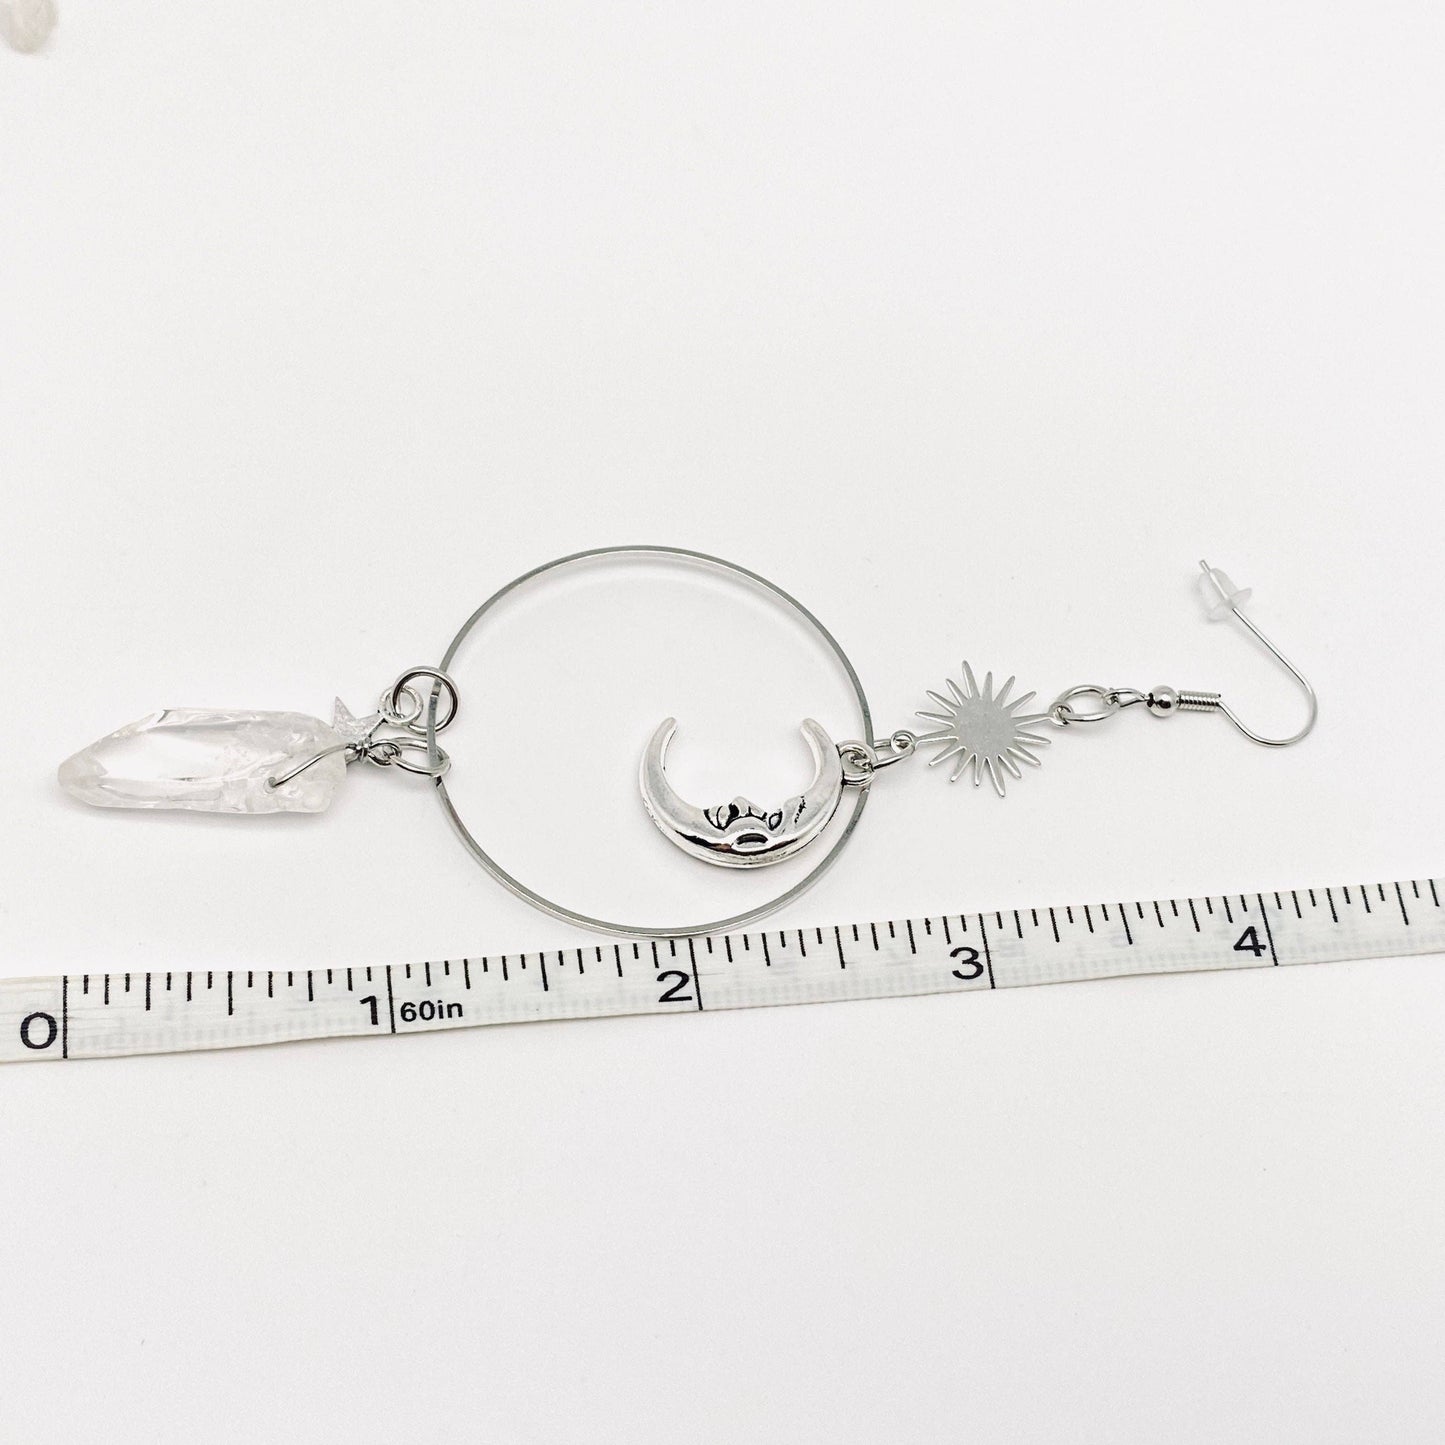 Silver Moon Crystal Pendant Earrings